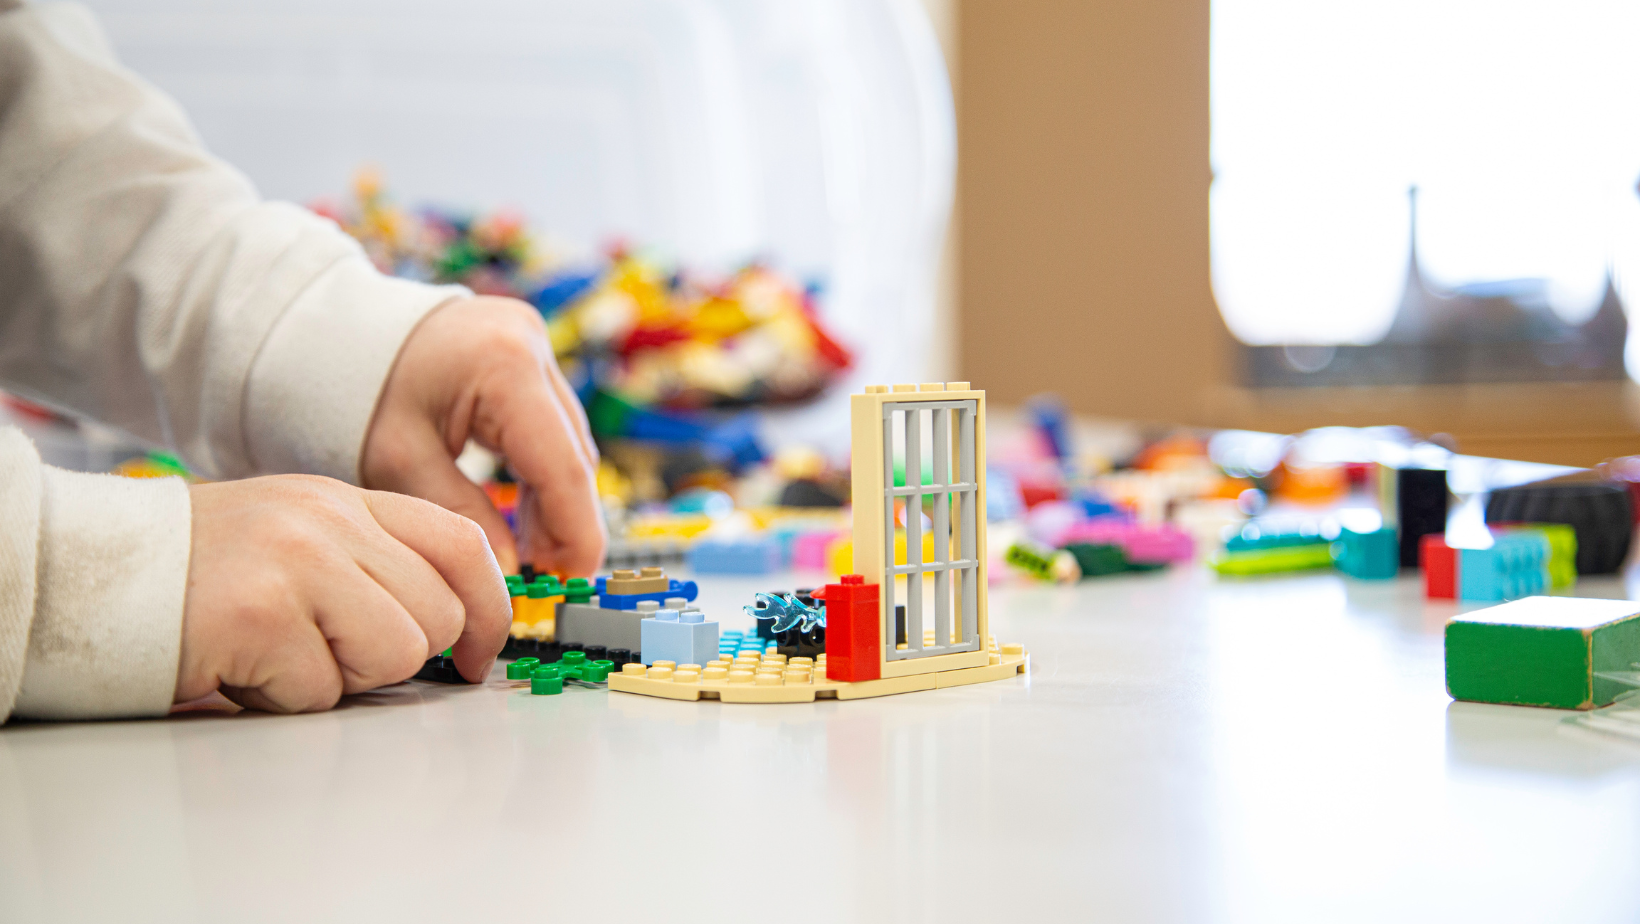 Build Creativity & Education with Lego